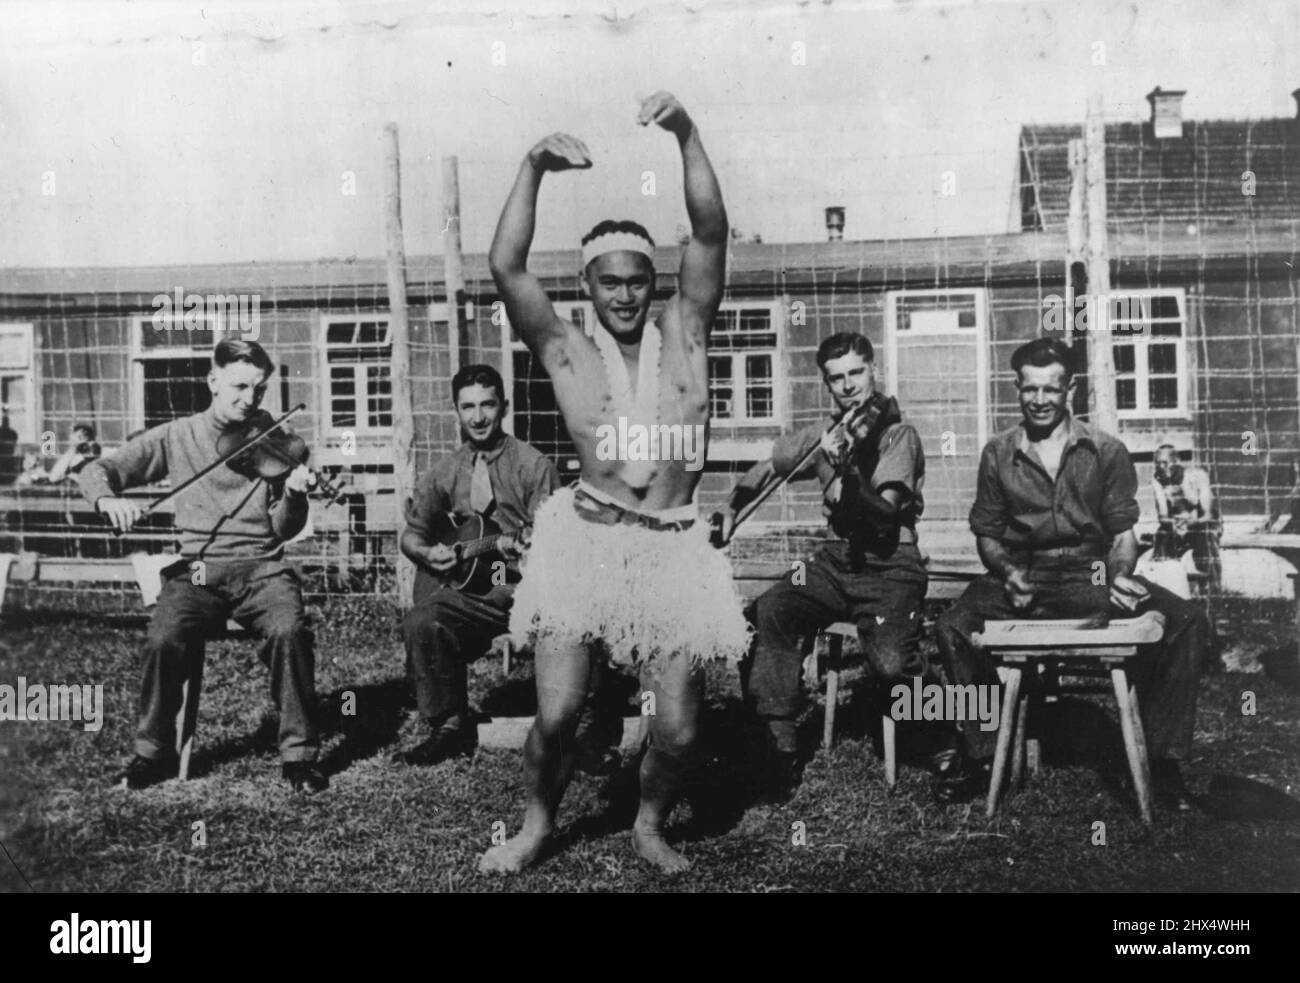 Camp band at Stalag XVIII A. October 16, 1943. Stock Photo